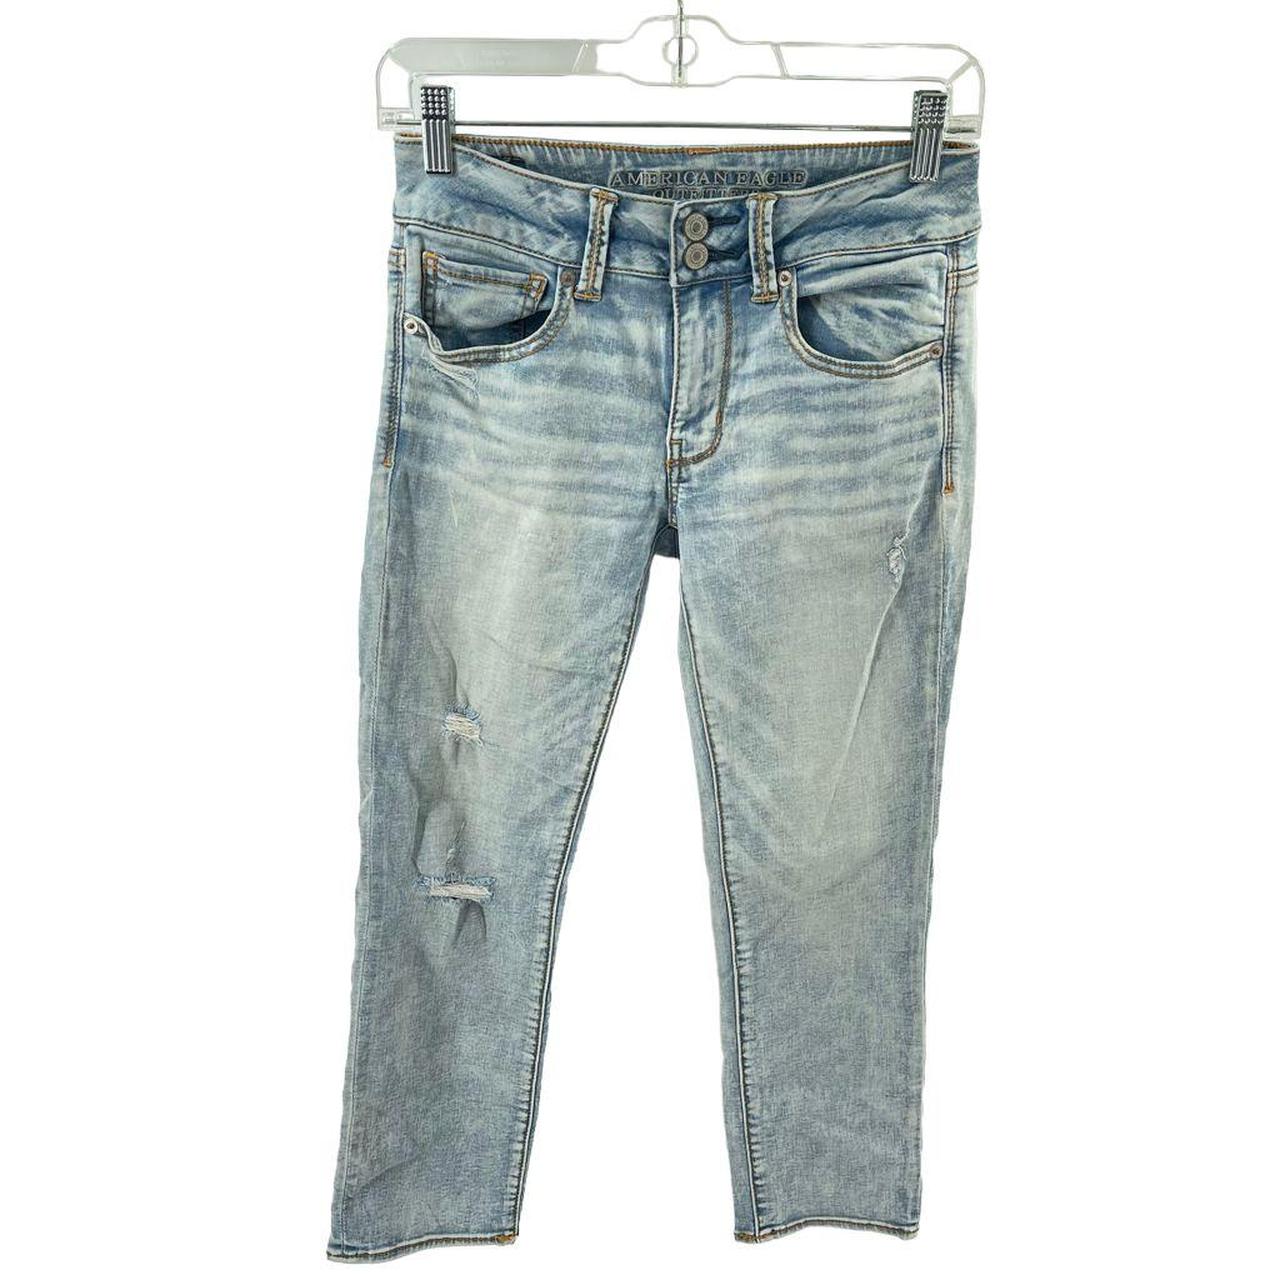 American Eagle Artist crop jeans Size - Depop